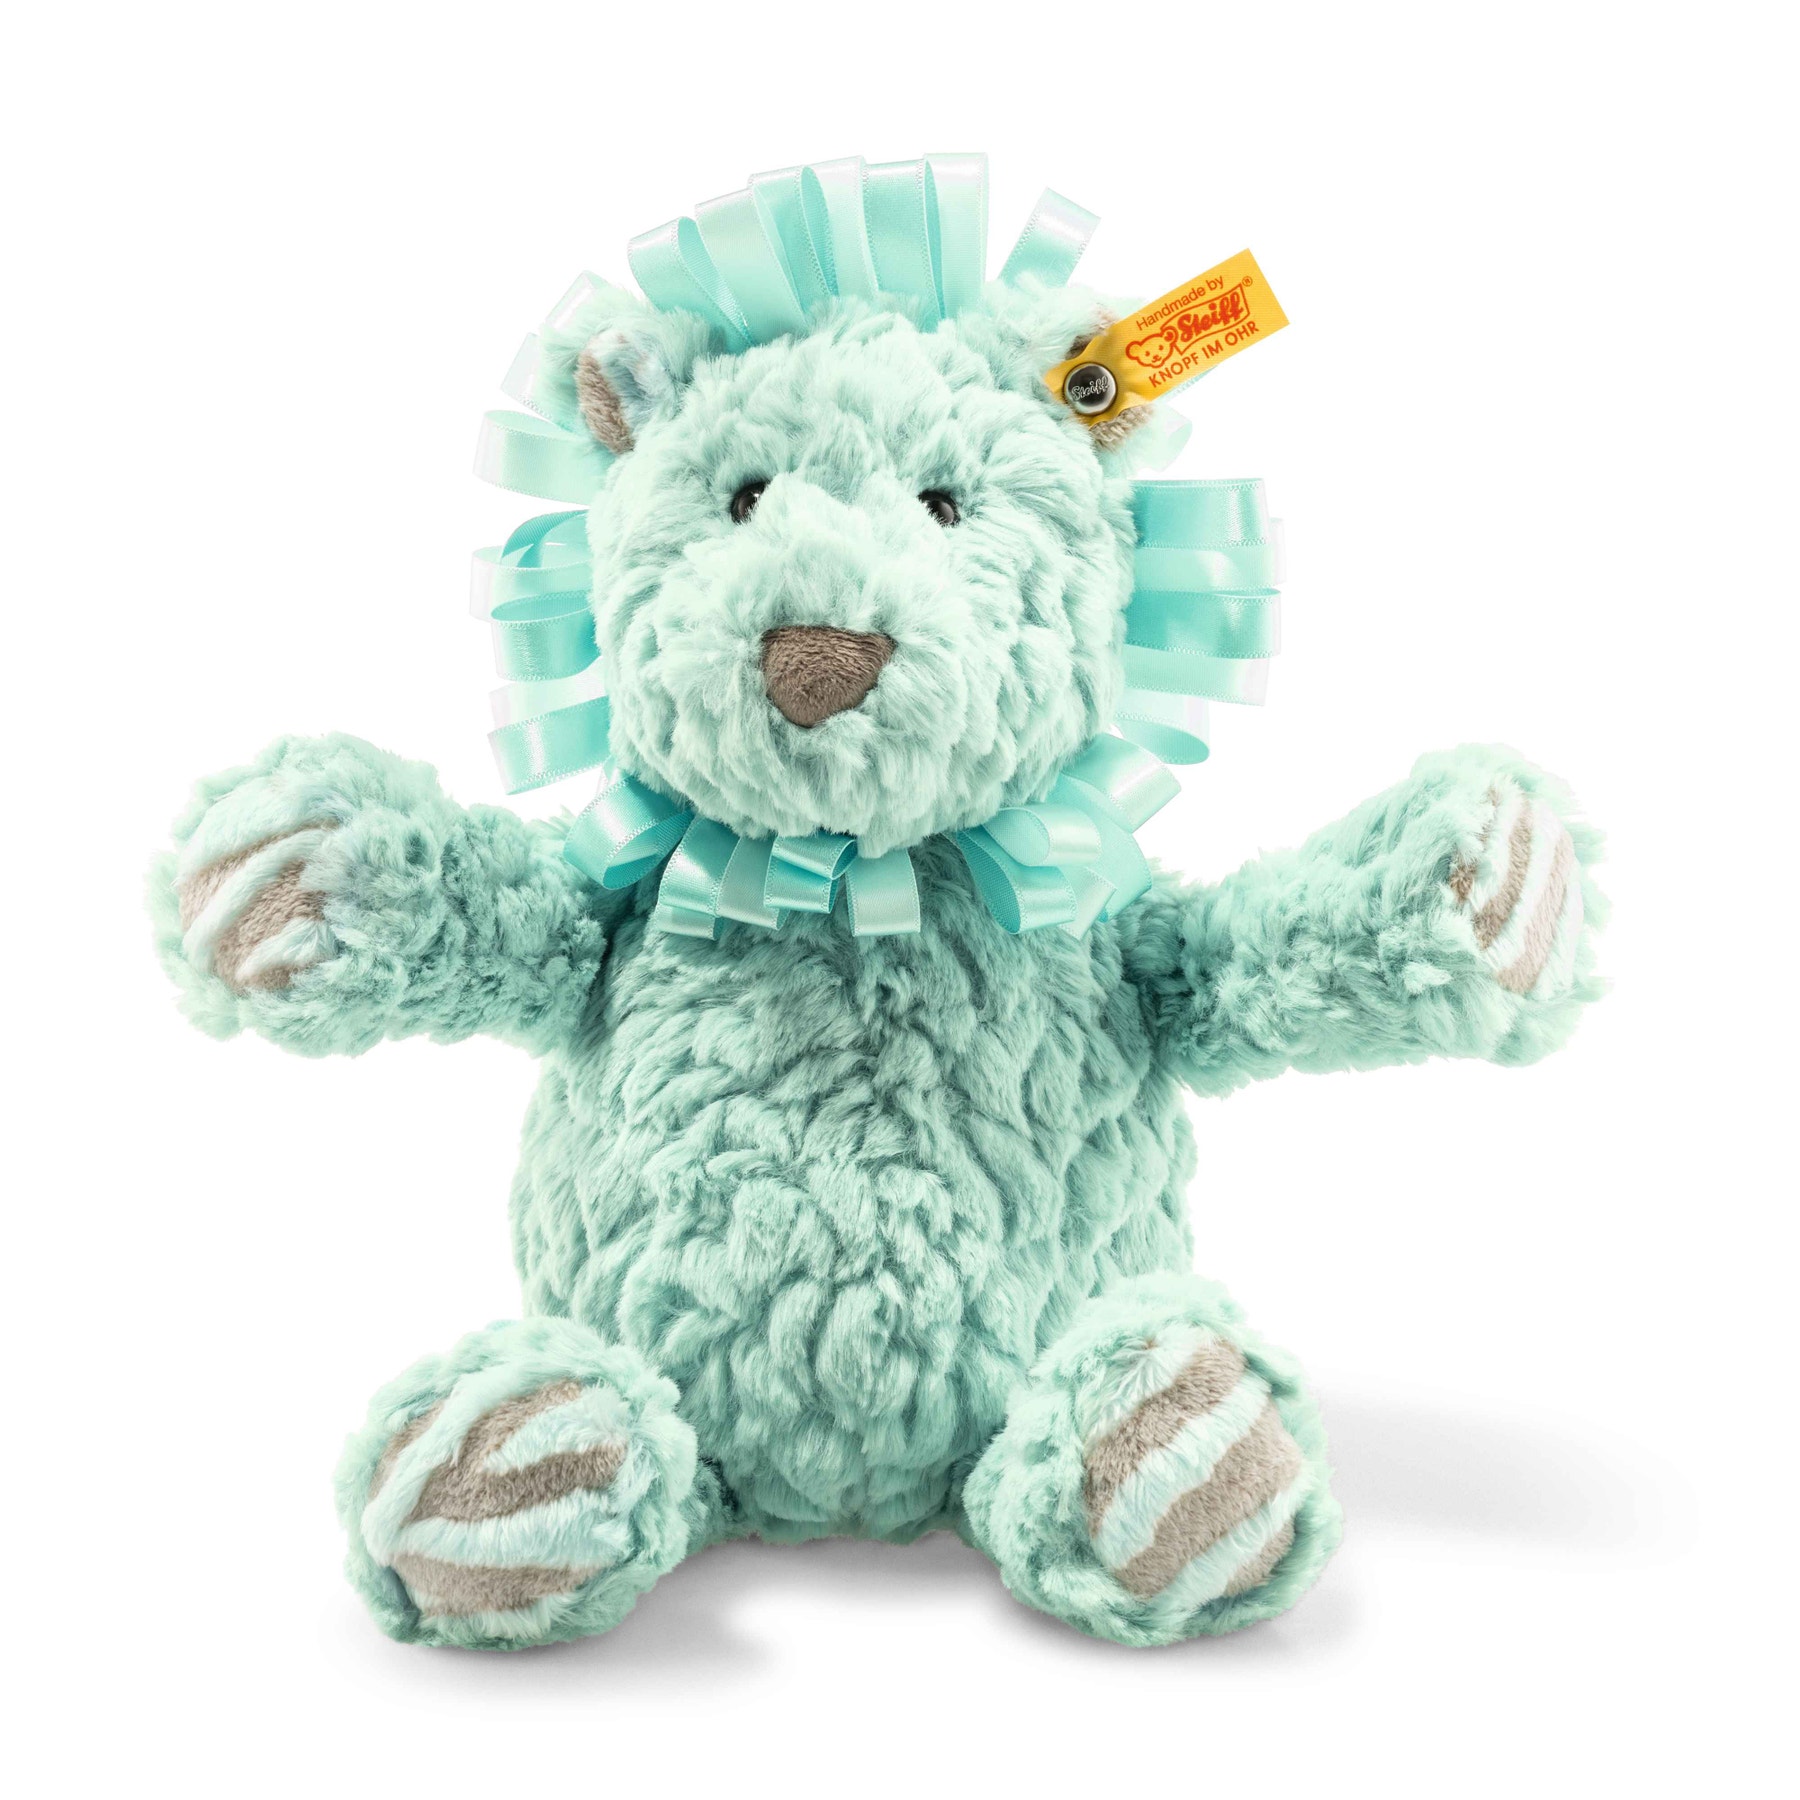 Soft Cuddly Friends Pawley Lion Medium with FREE gift box by Steiff EAN 065620 